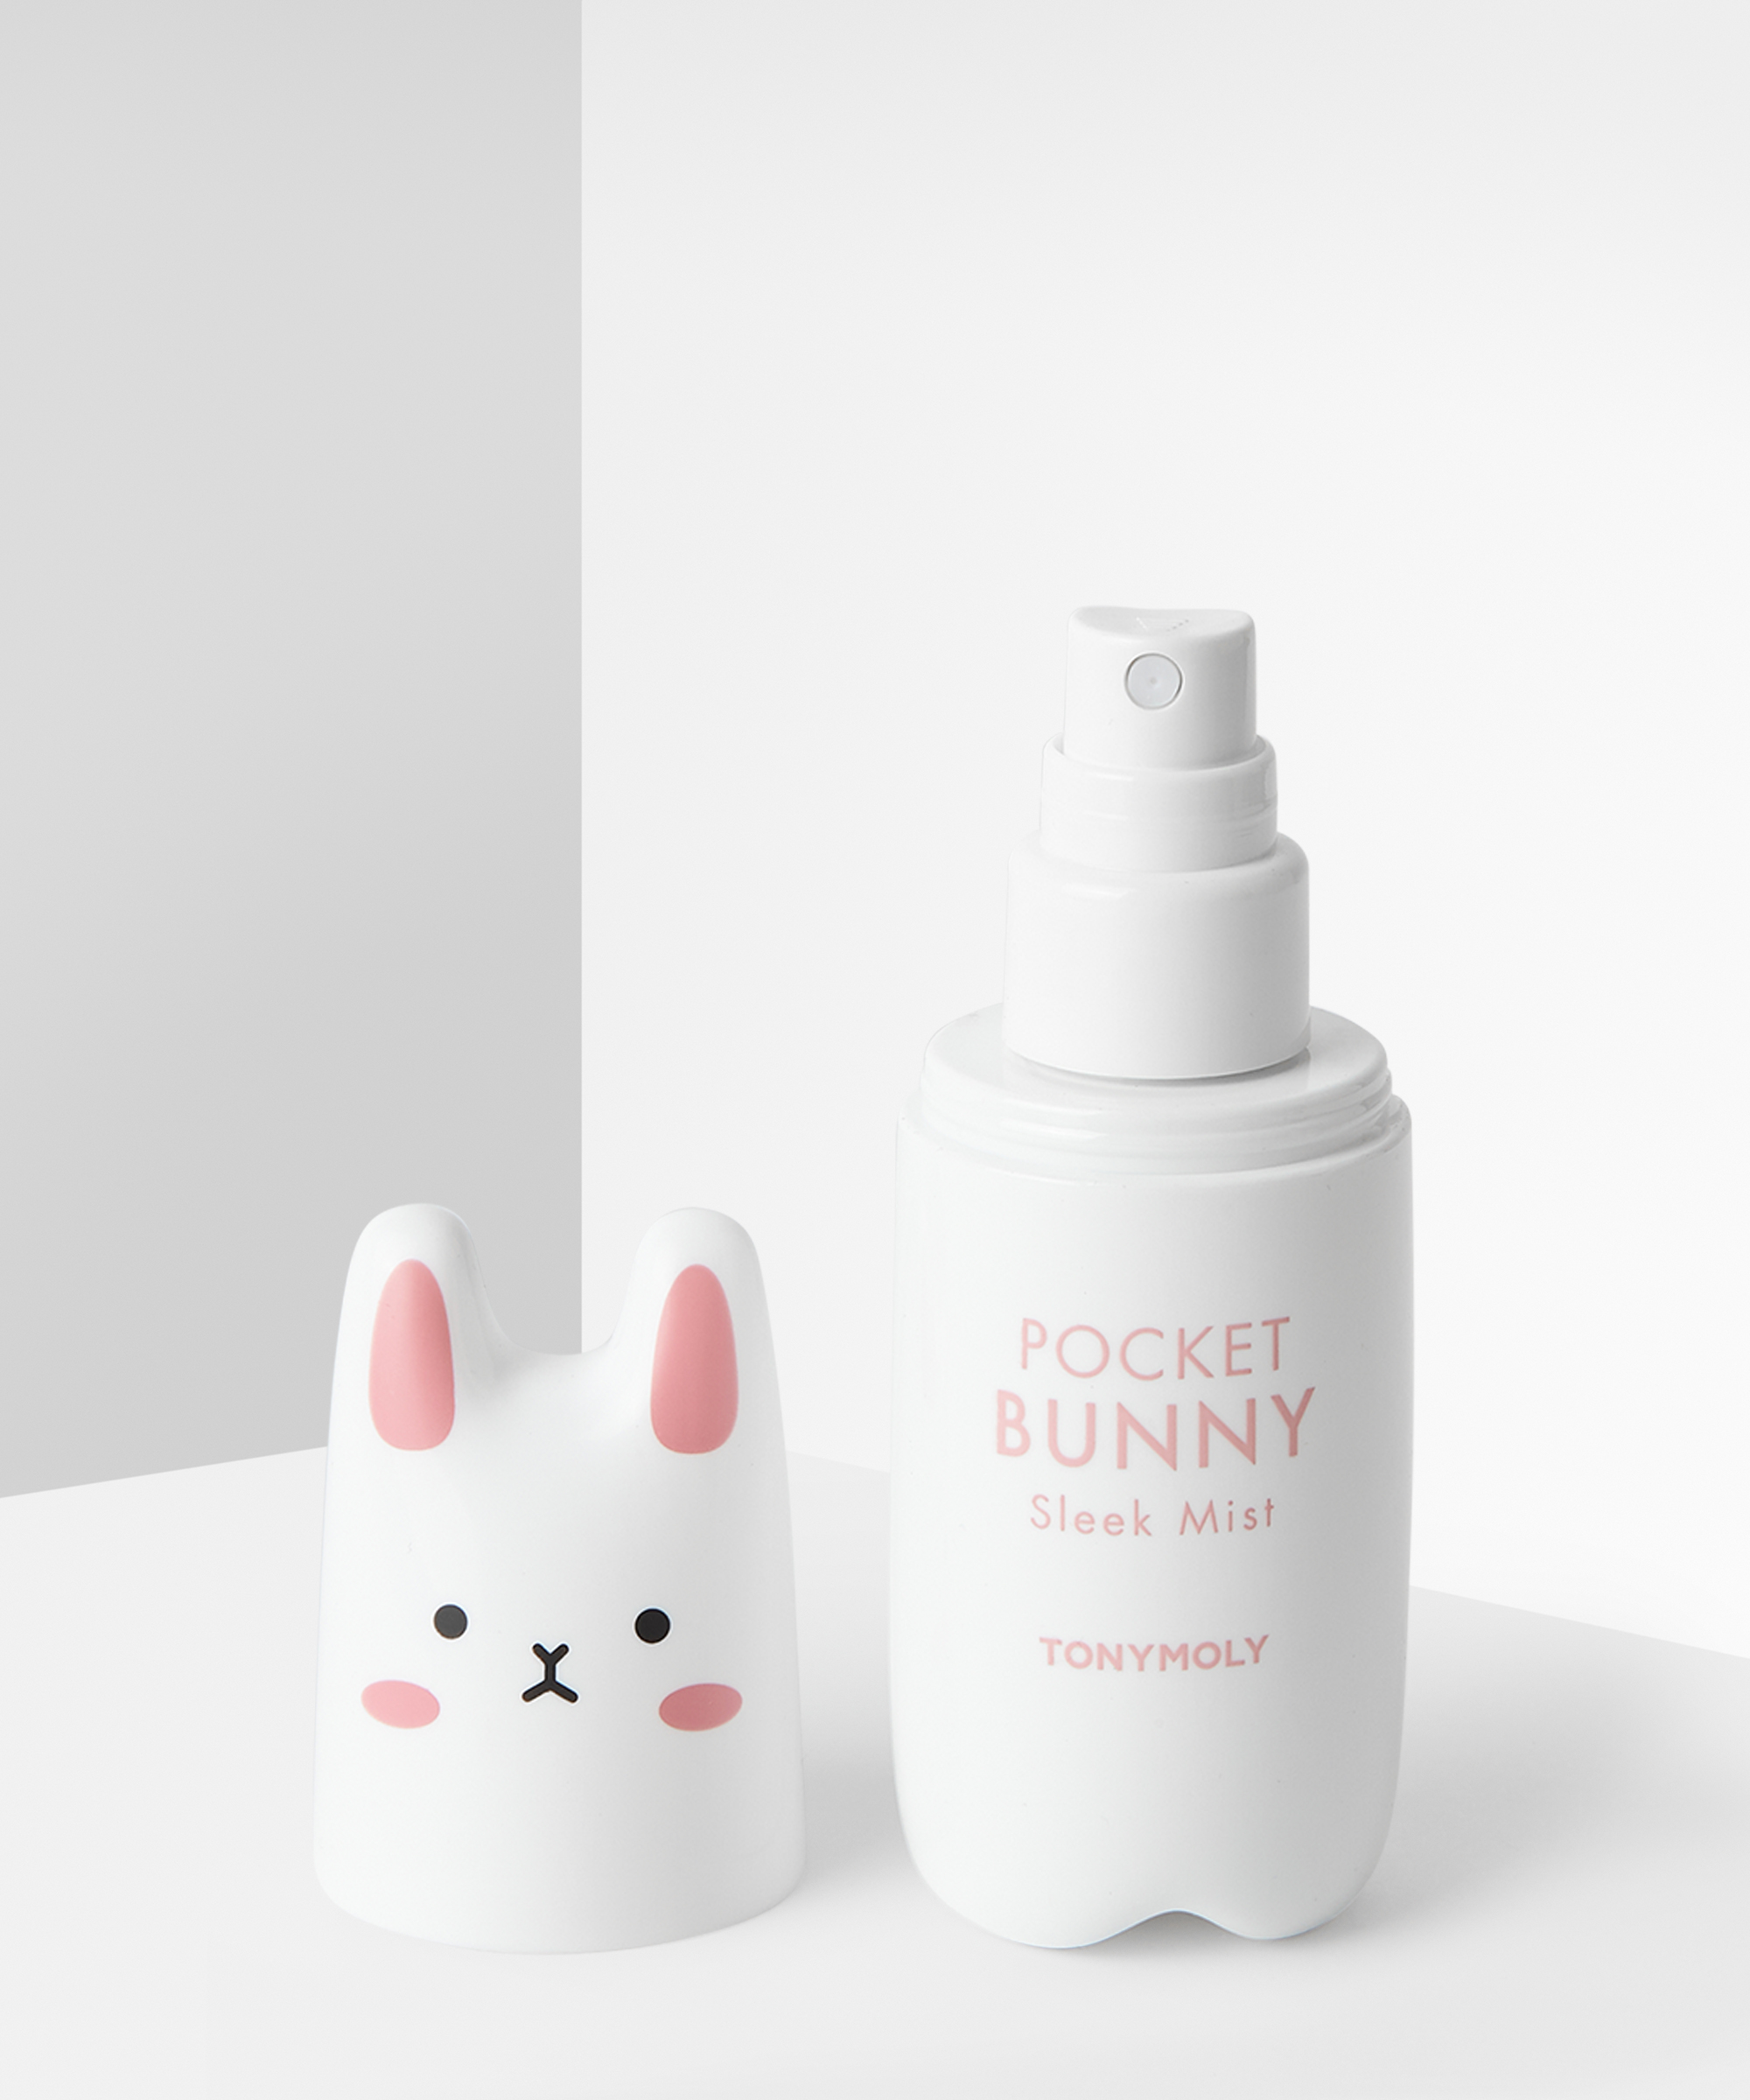 Pocket Bunny Mist